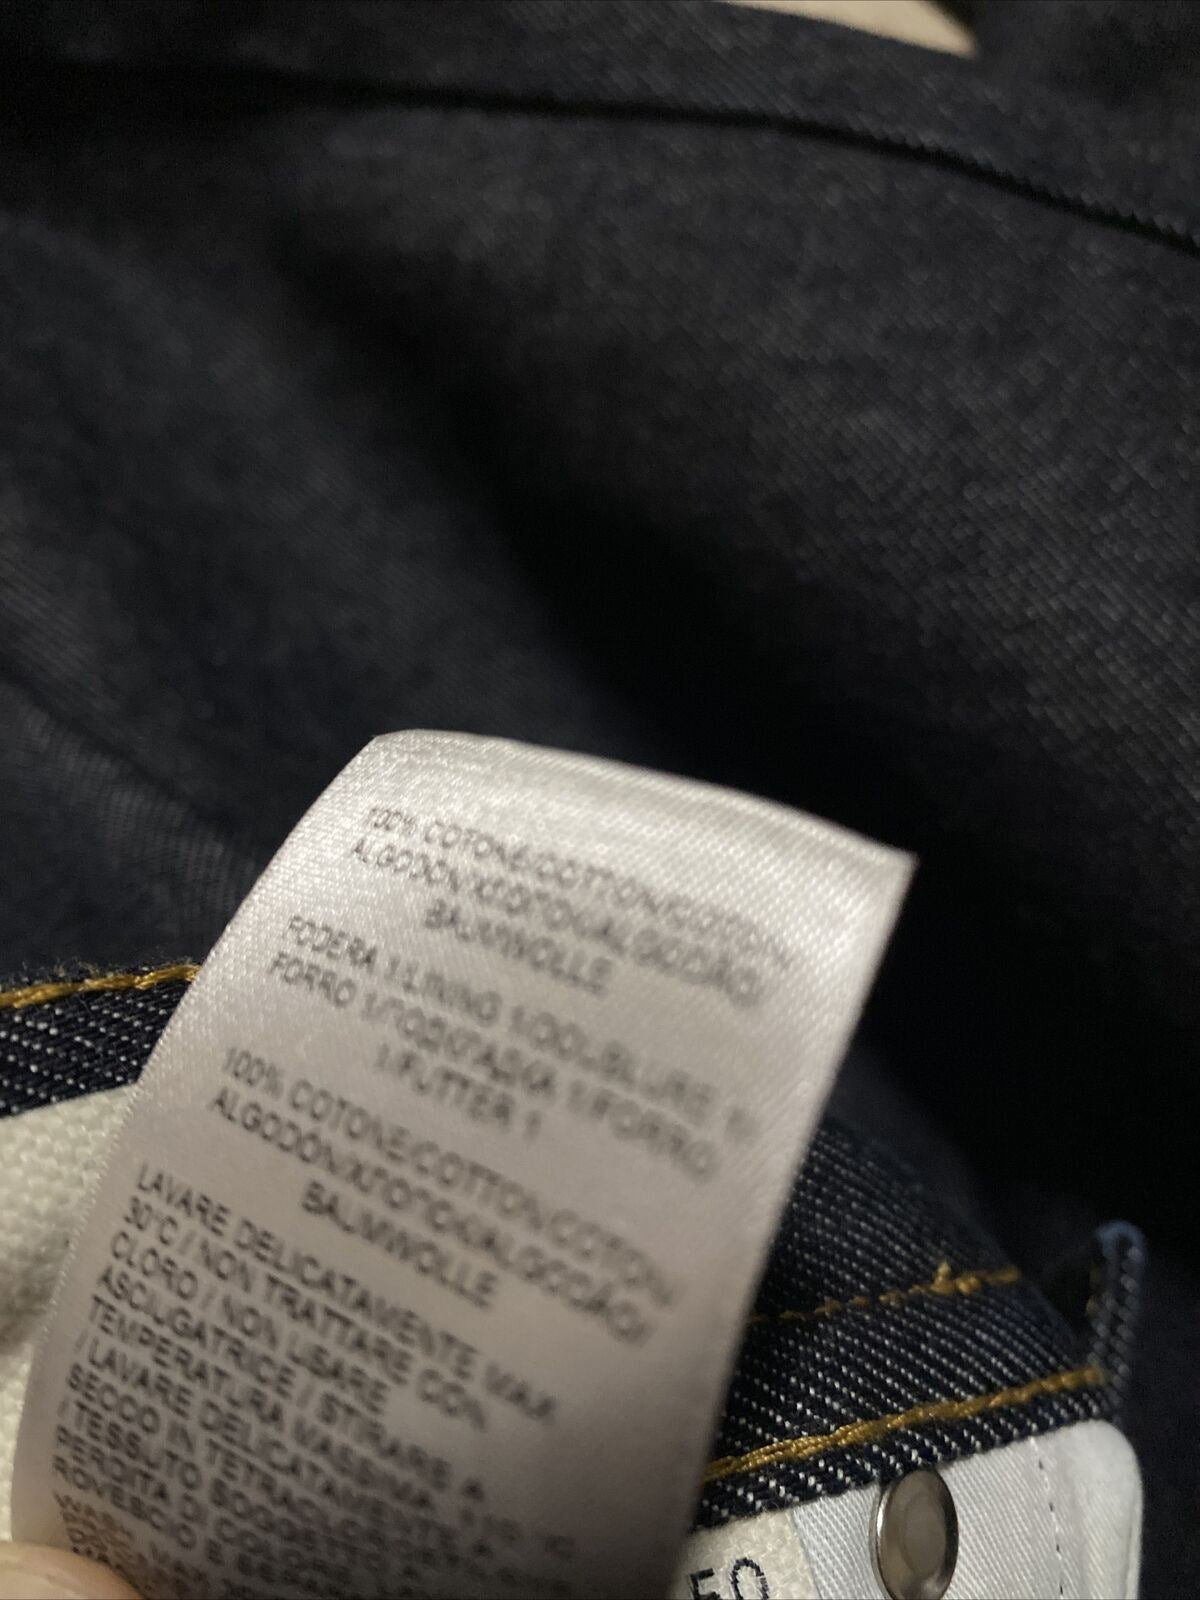 NWT $590 Bottega Veneta Men’s Jeans Pants Blue Denim 34 US/50 Eu Italy